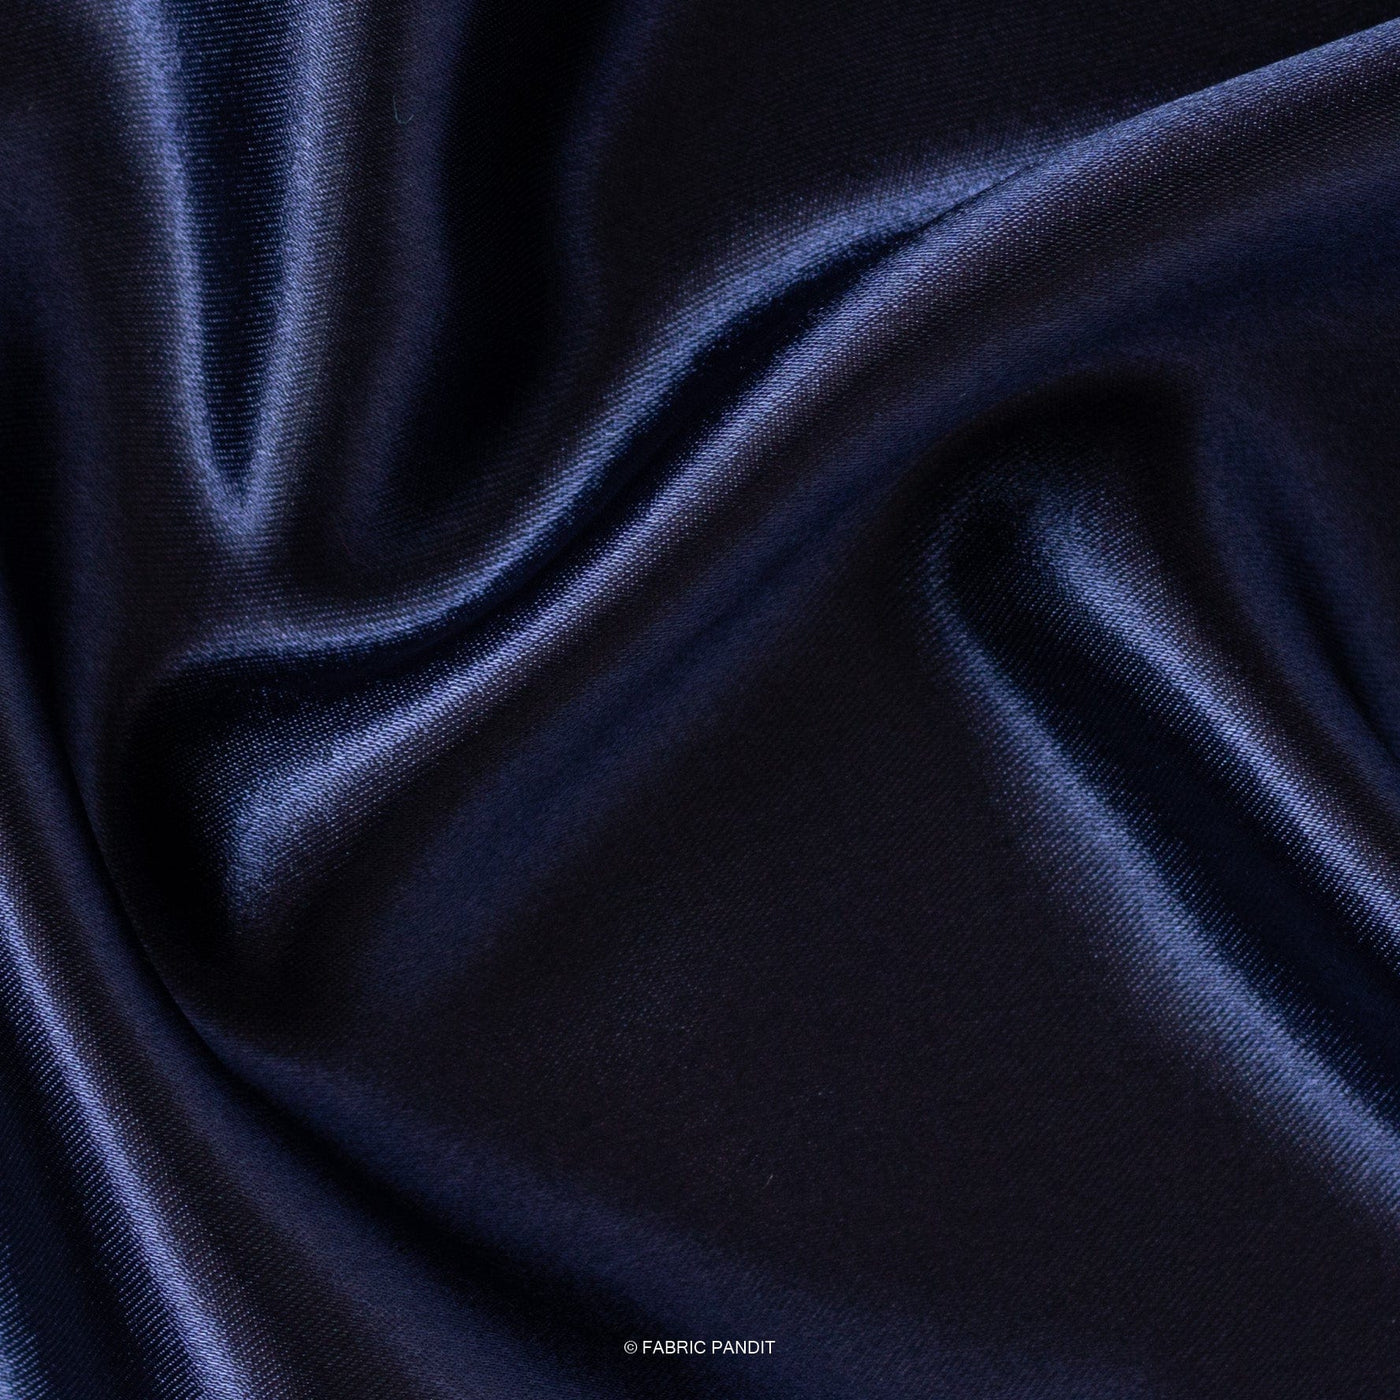 Fabric Pandit Fabric Navy Blue Plain Premium Ultra Satin Fabric (Width 44 Inches)